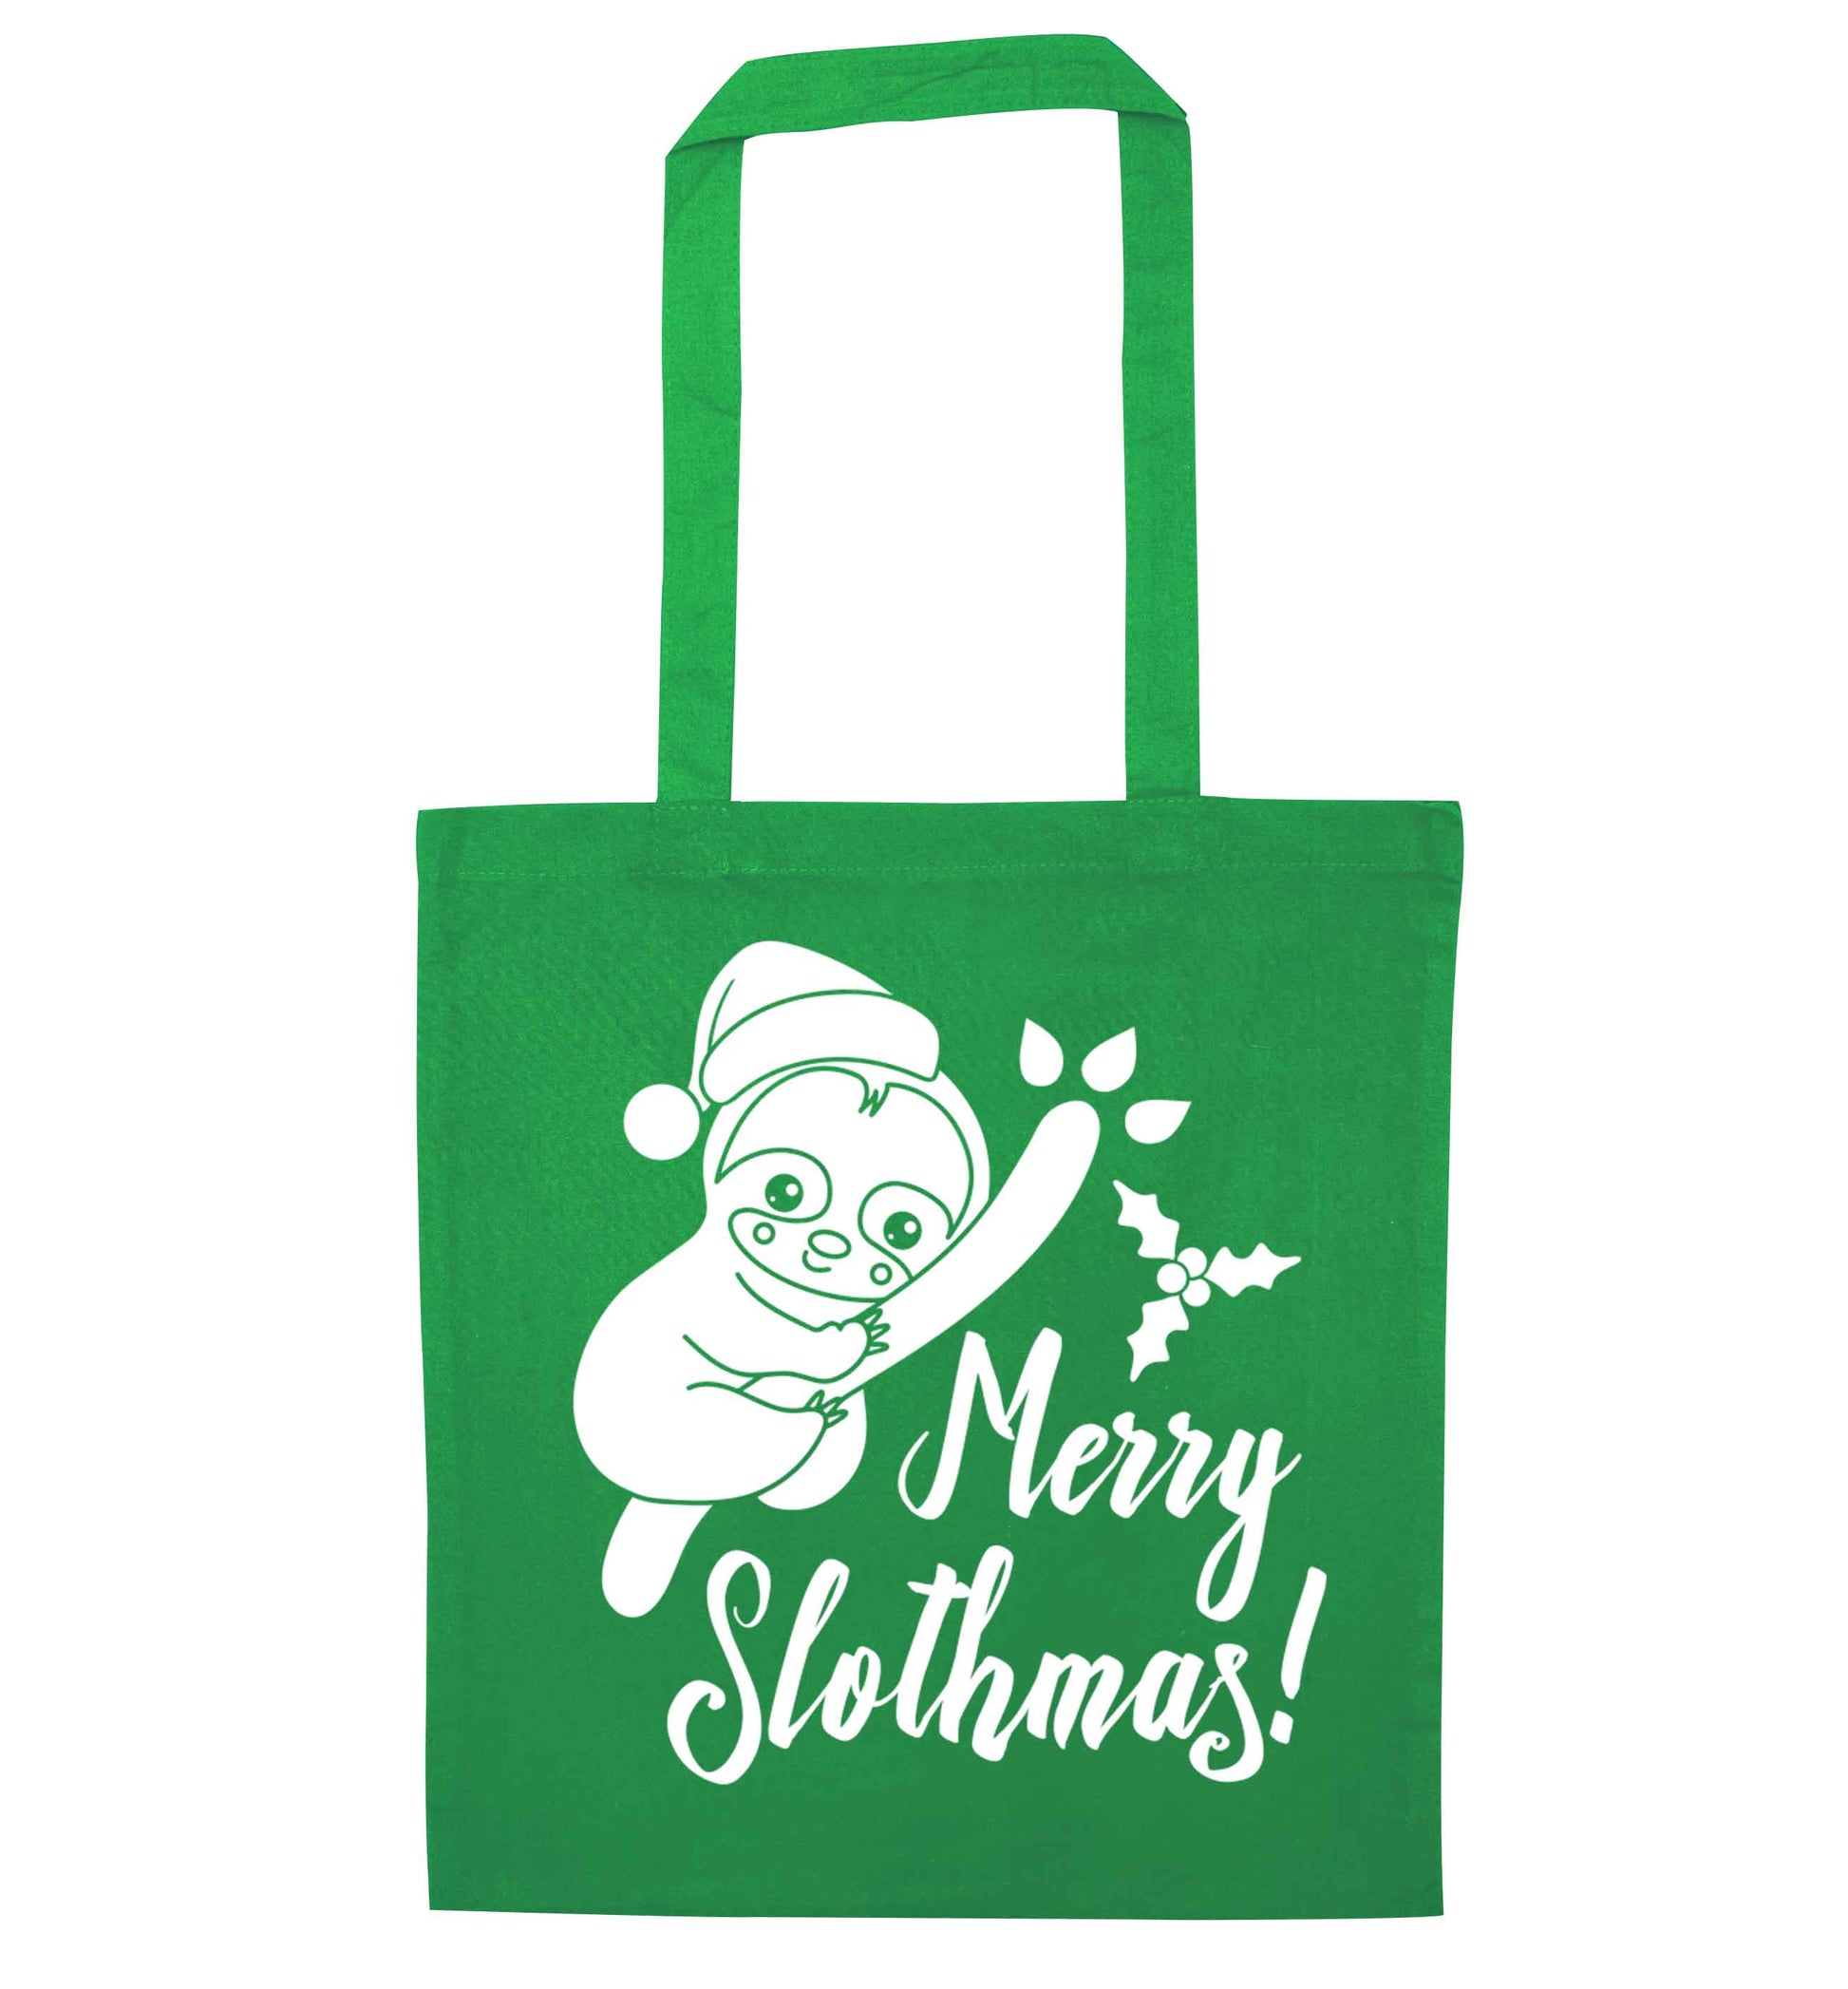 Merry Slothmas green tote bag